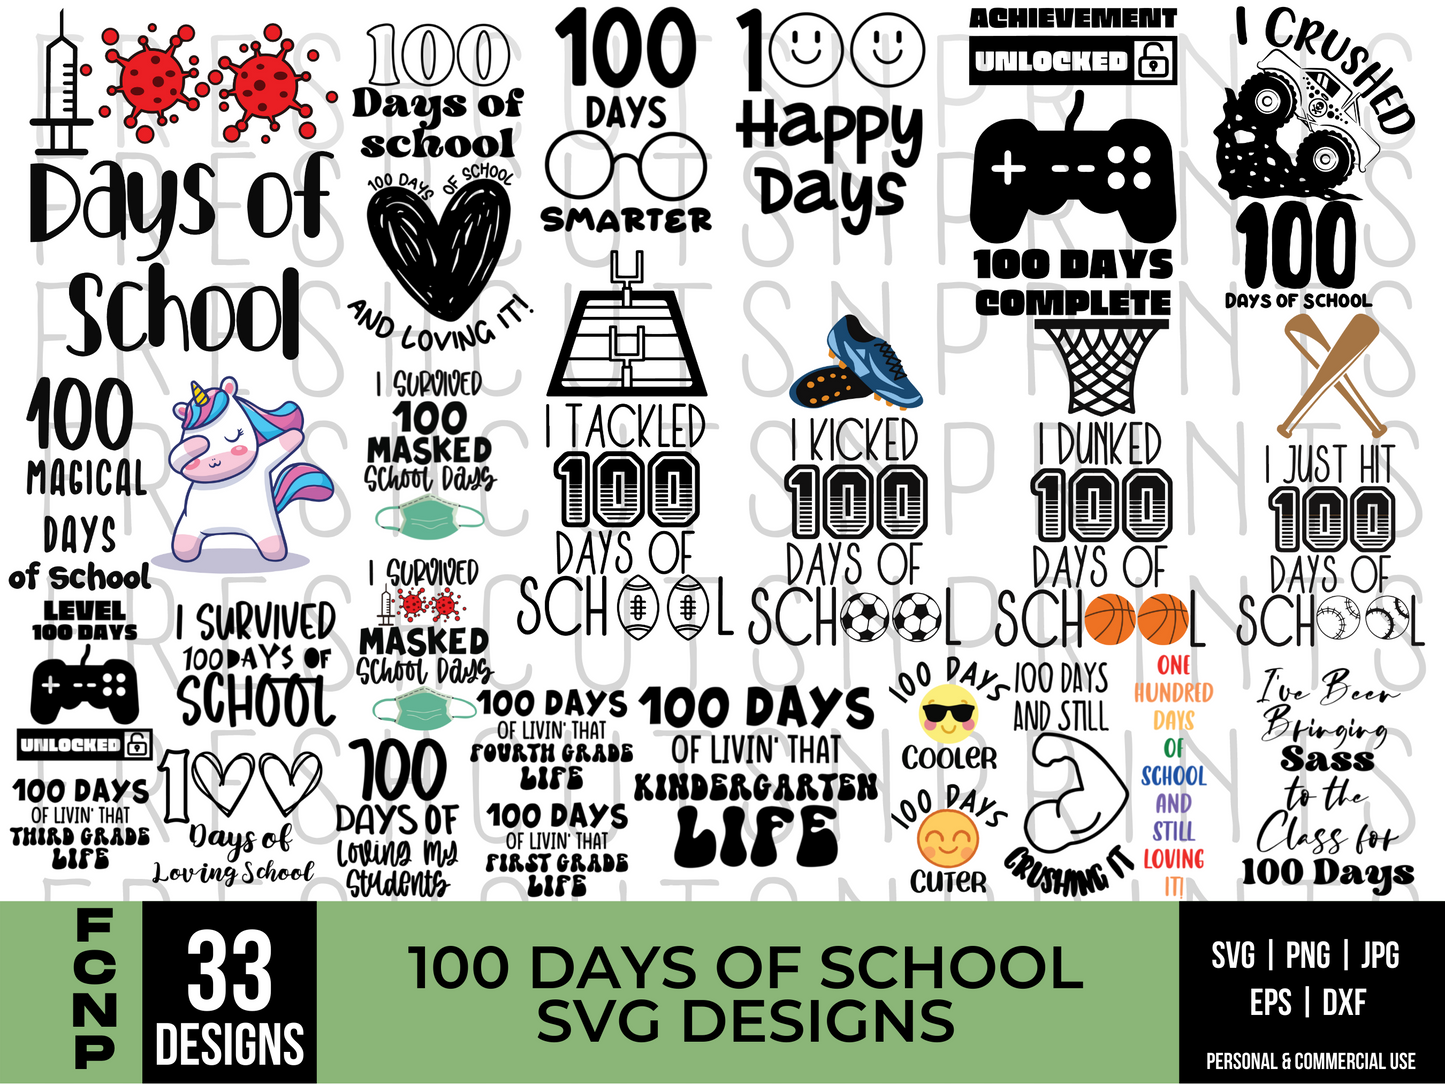 100 days of school svg, school svg, 100 days smarter svg, 100th day of school svg, Teacher svg, 100 days unlocked, i crushed 100 days